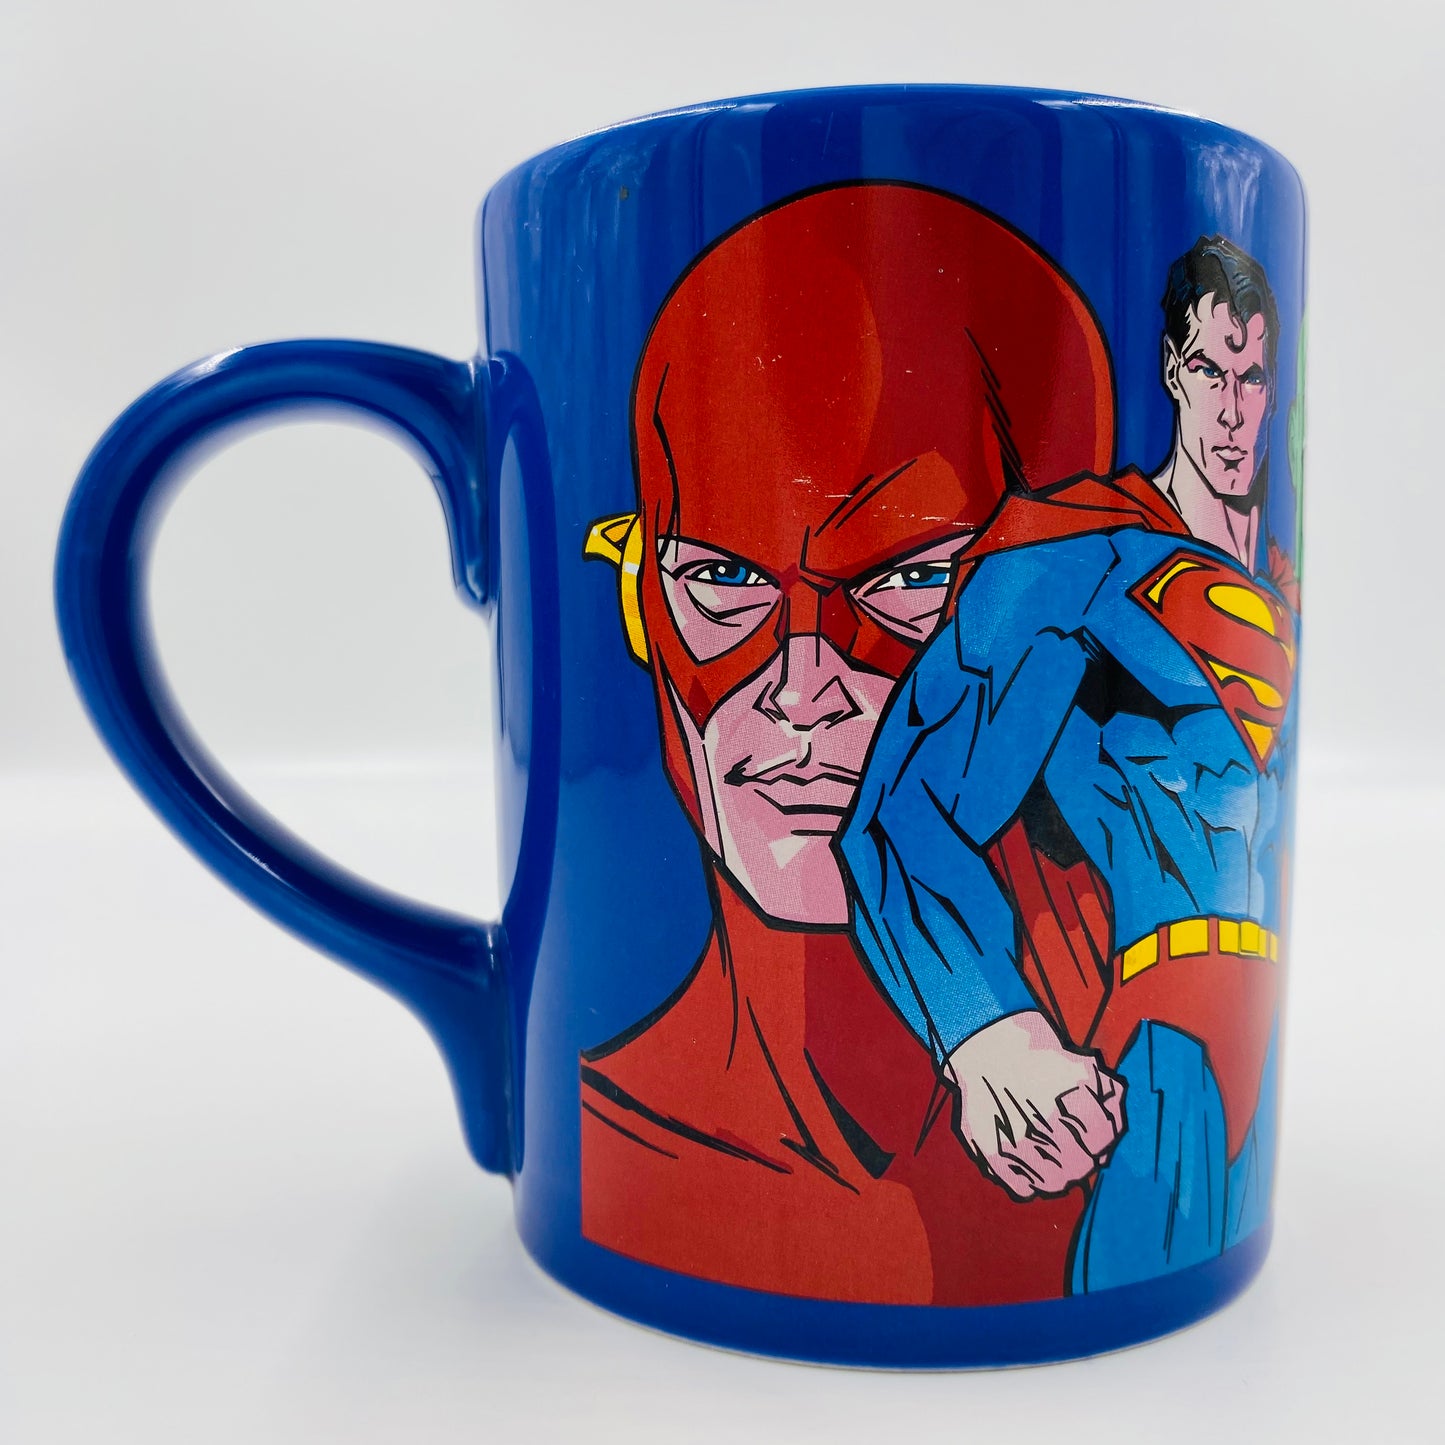 Warner Bros. Studio Store: DC Heroes & Villains coffee mug (1999) WB/DC